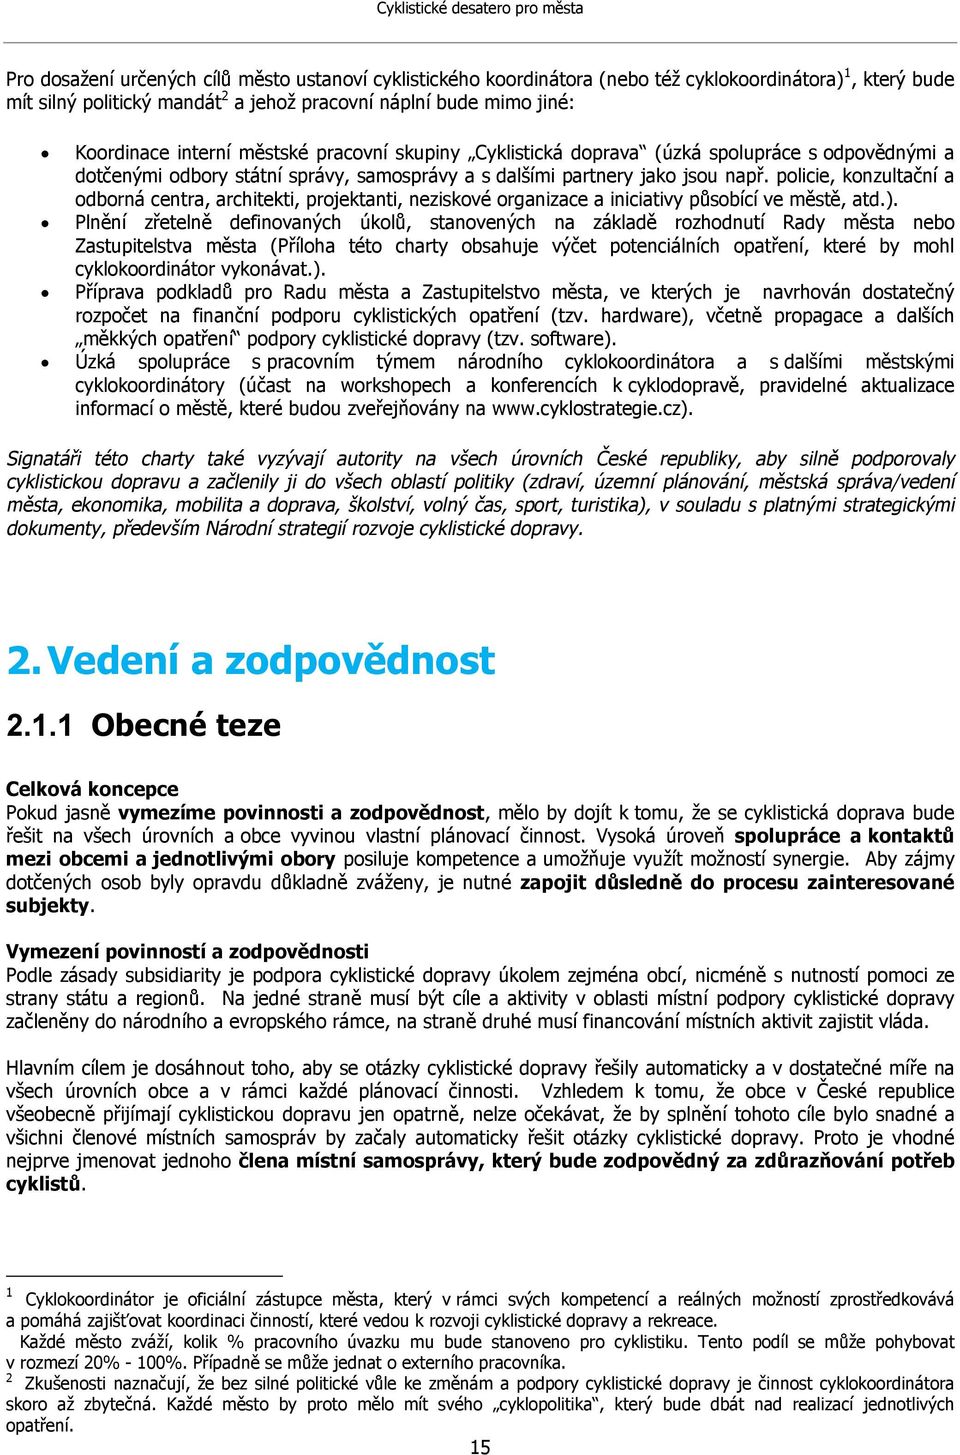 CYKLISTICKÉ DESATERO PRO MĚSTA - PDF Free Download